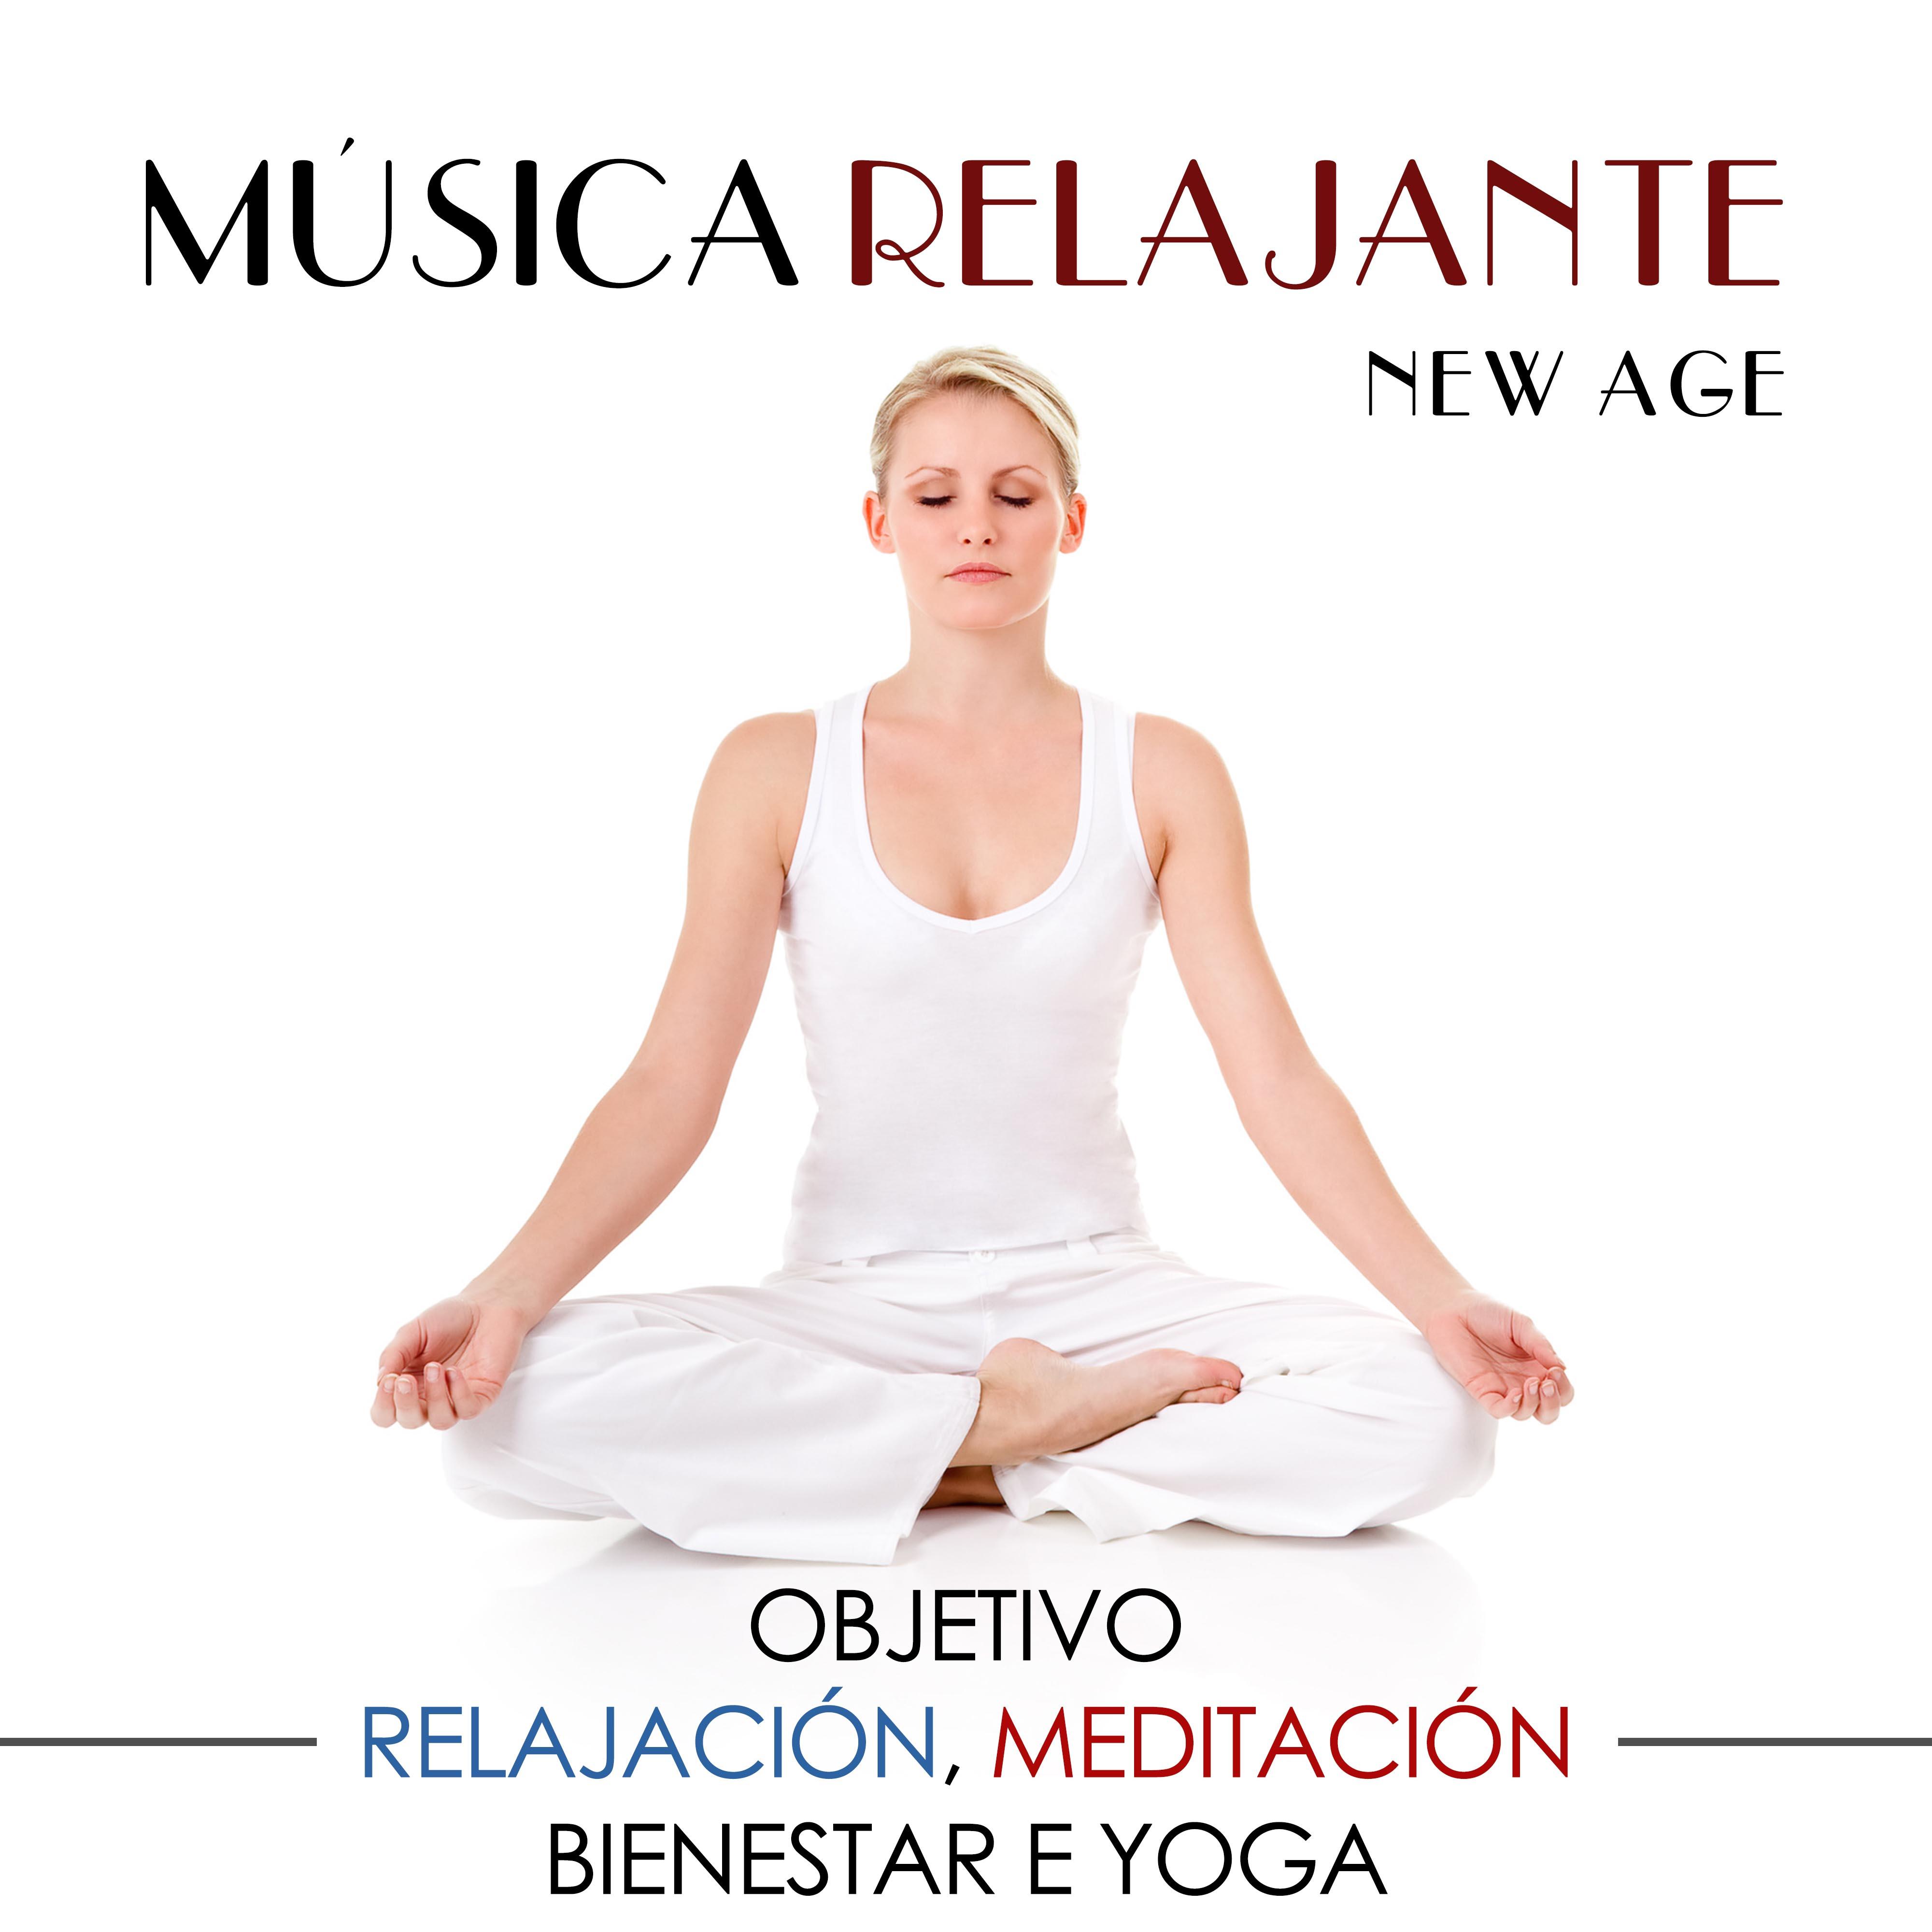 Mu sica Relajante New Age: Objetivo Relajacio n, Meditacio n, Bienestar e Yoga